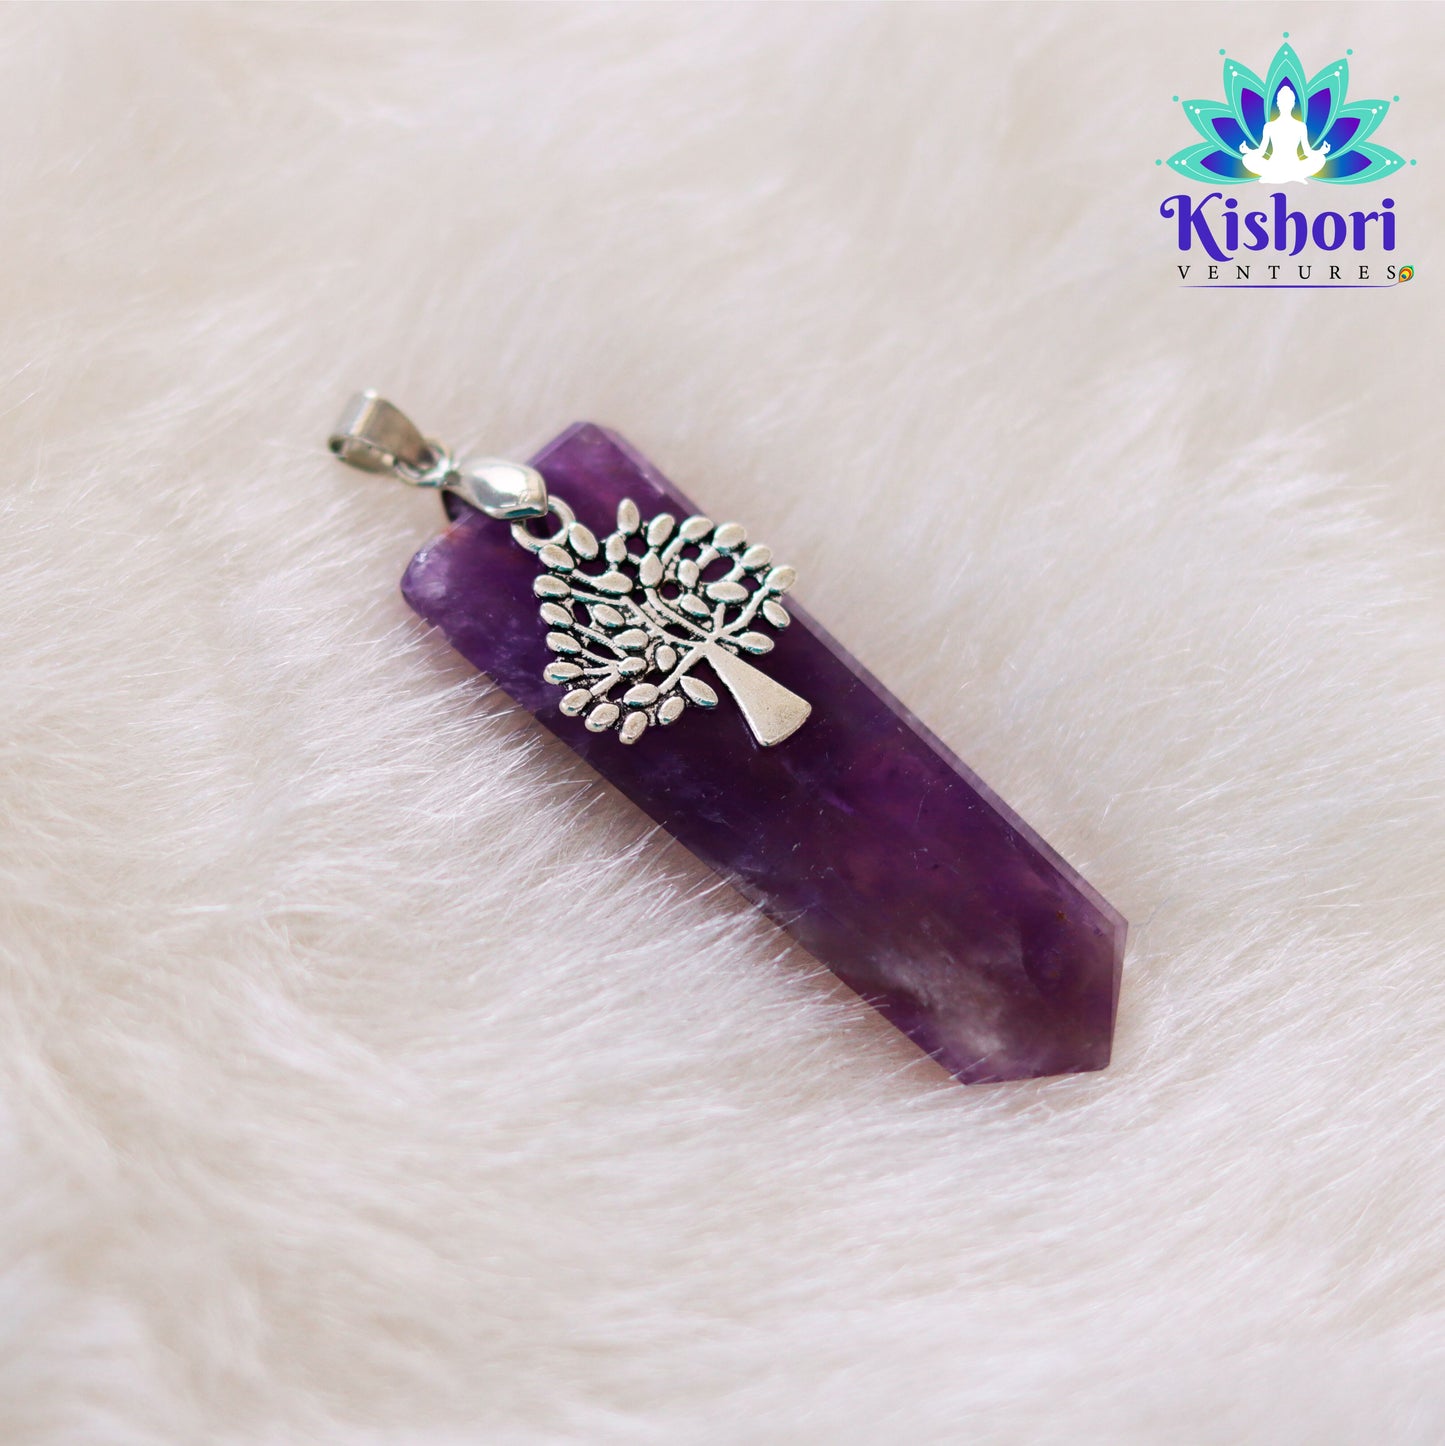 Kishori Ventures Natural Amethyst Elegance Pendant - Royal Purple